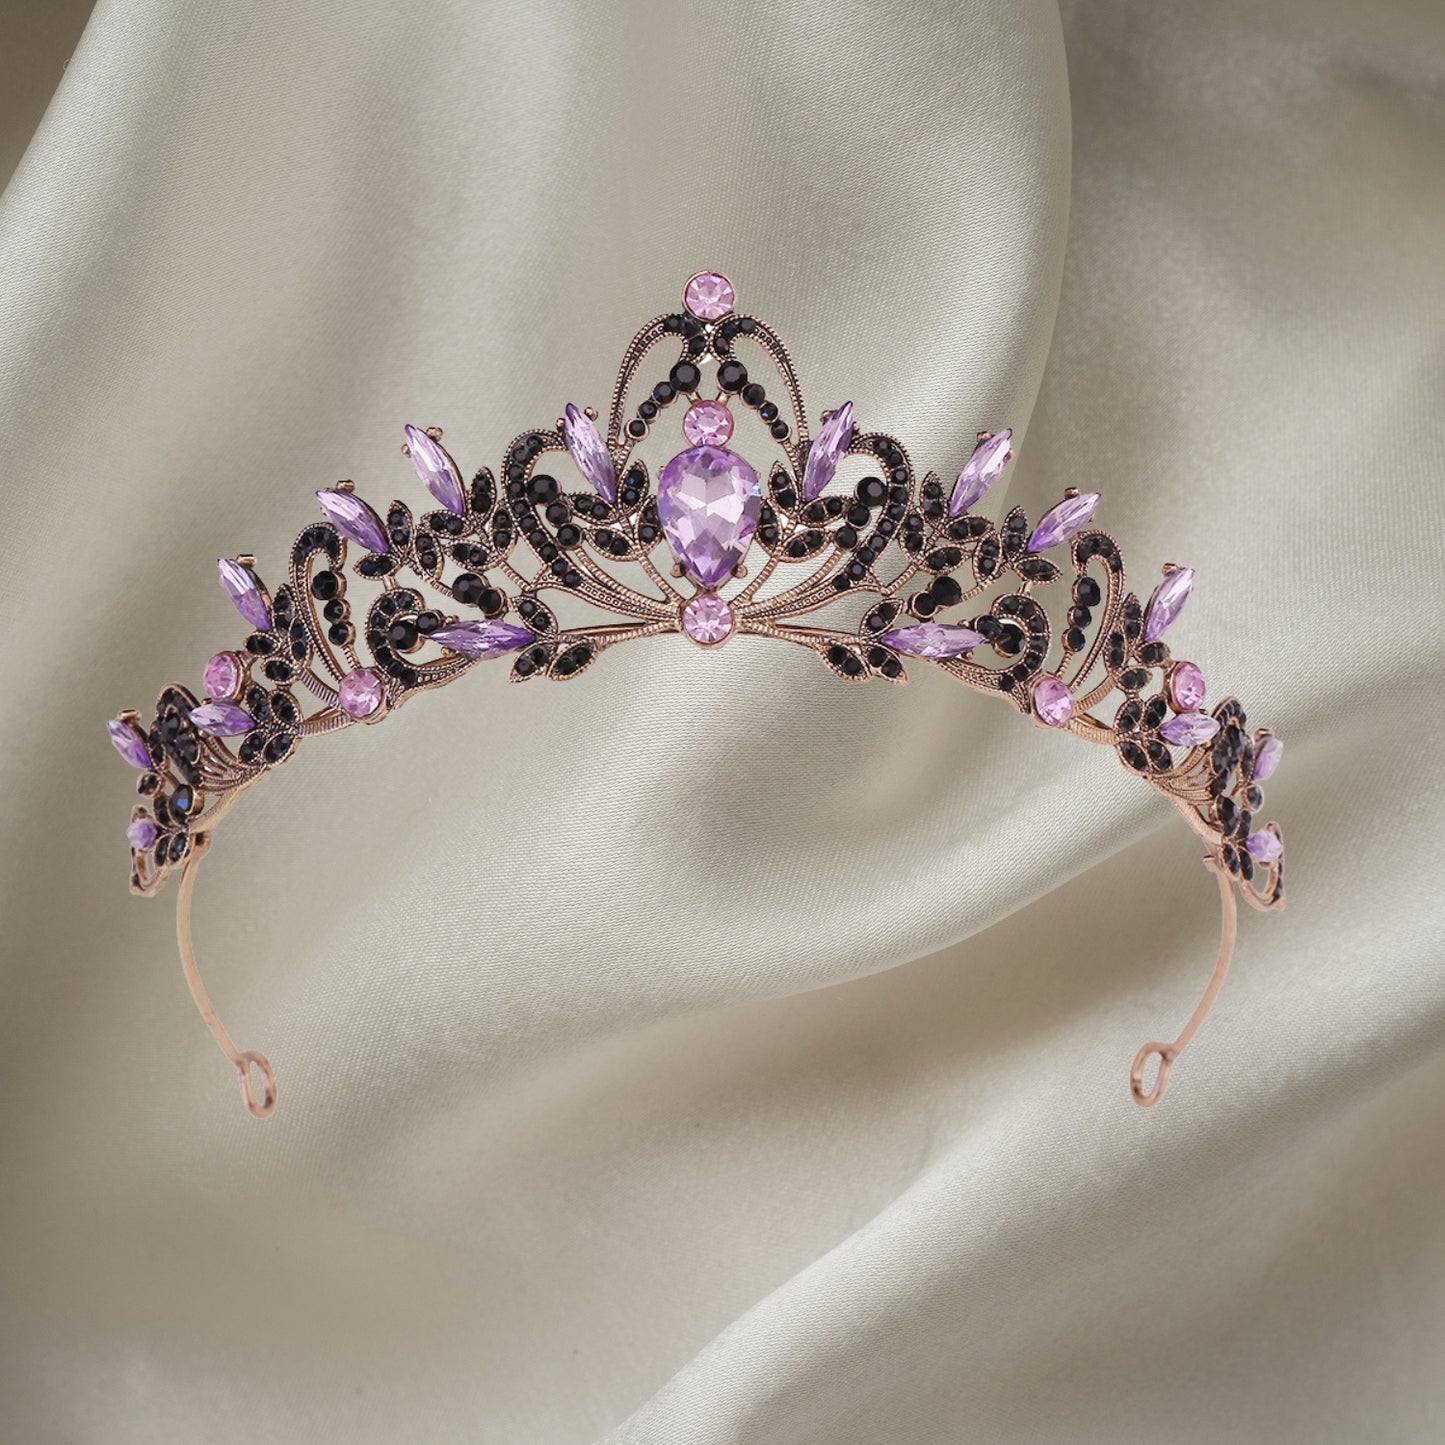 Baroque Queen Crown Tiara Crystal Tiaras And Crowns For Women Gold Wedding Tiara For Bride